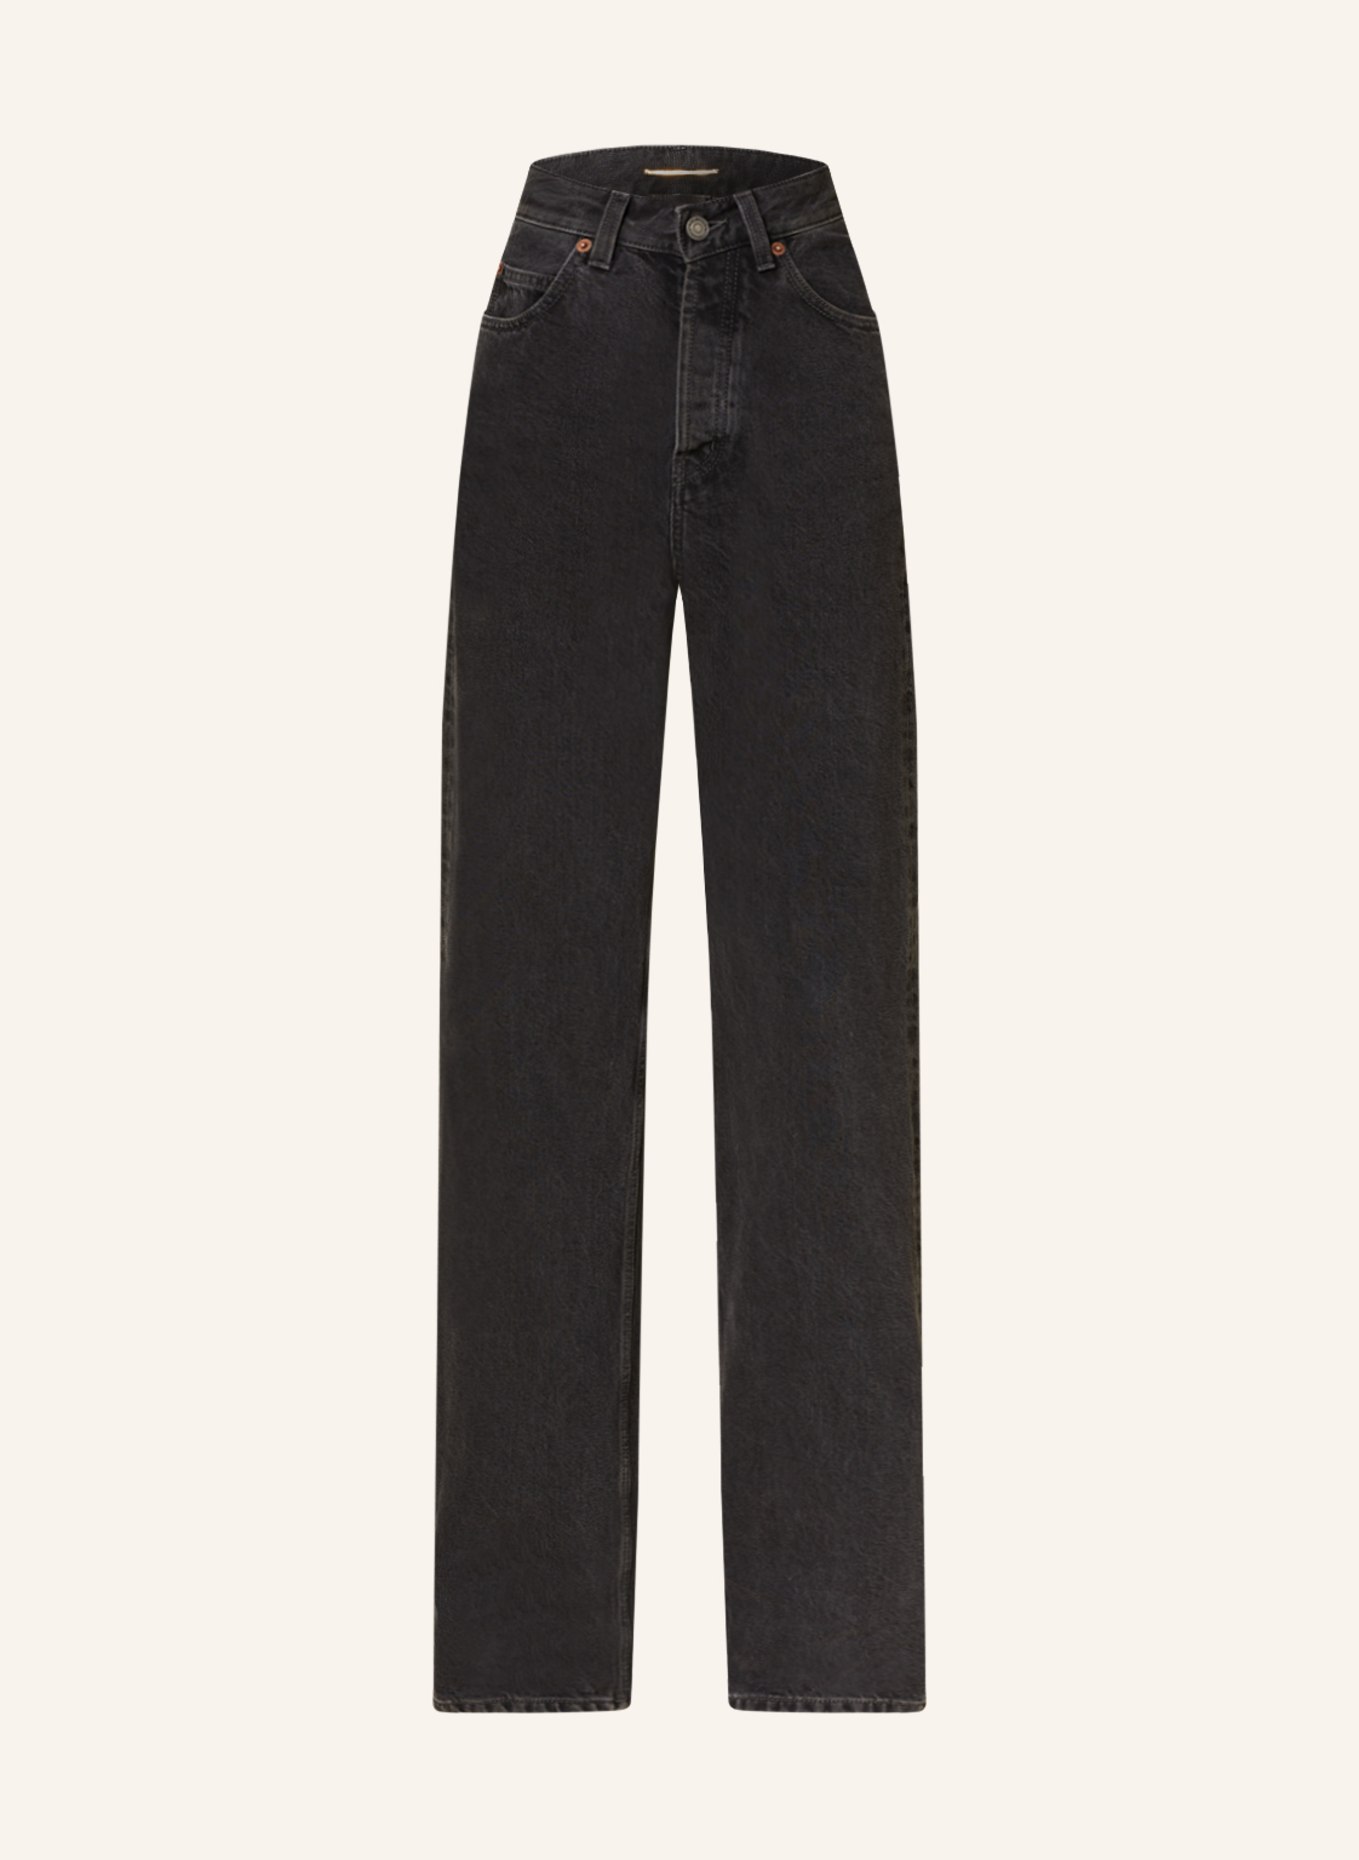 SAINT LAURENT Jeans, Farbe: 1805 90'S FRENCH BLACK (Bild 1)